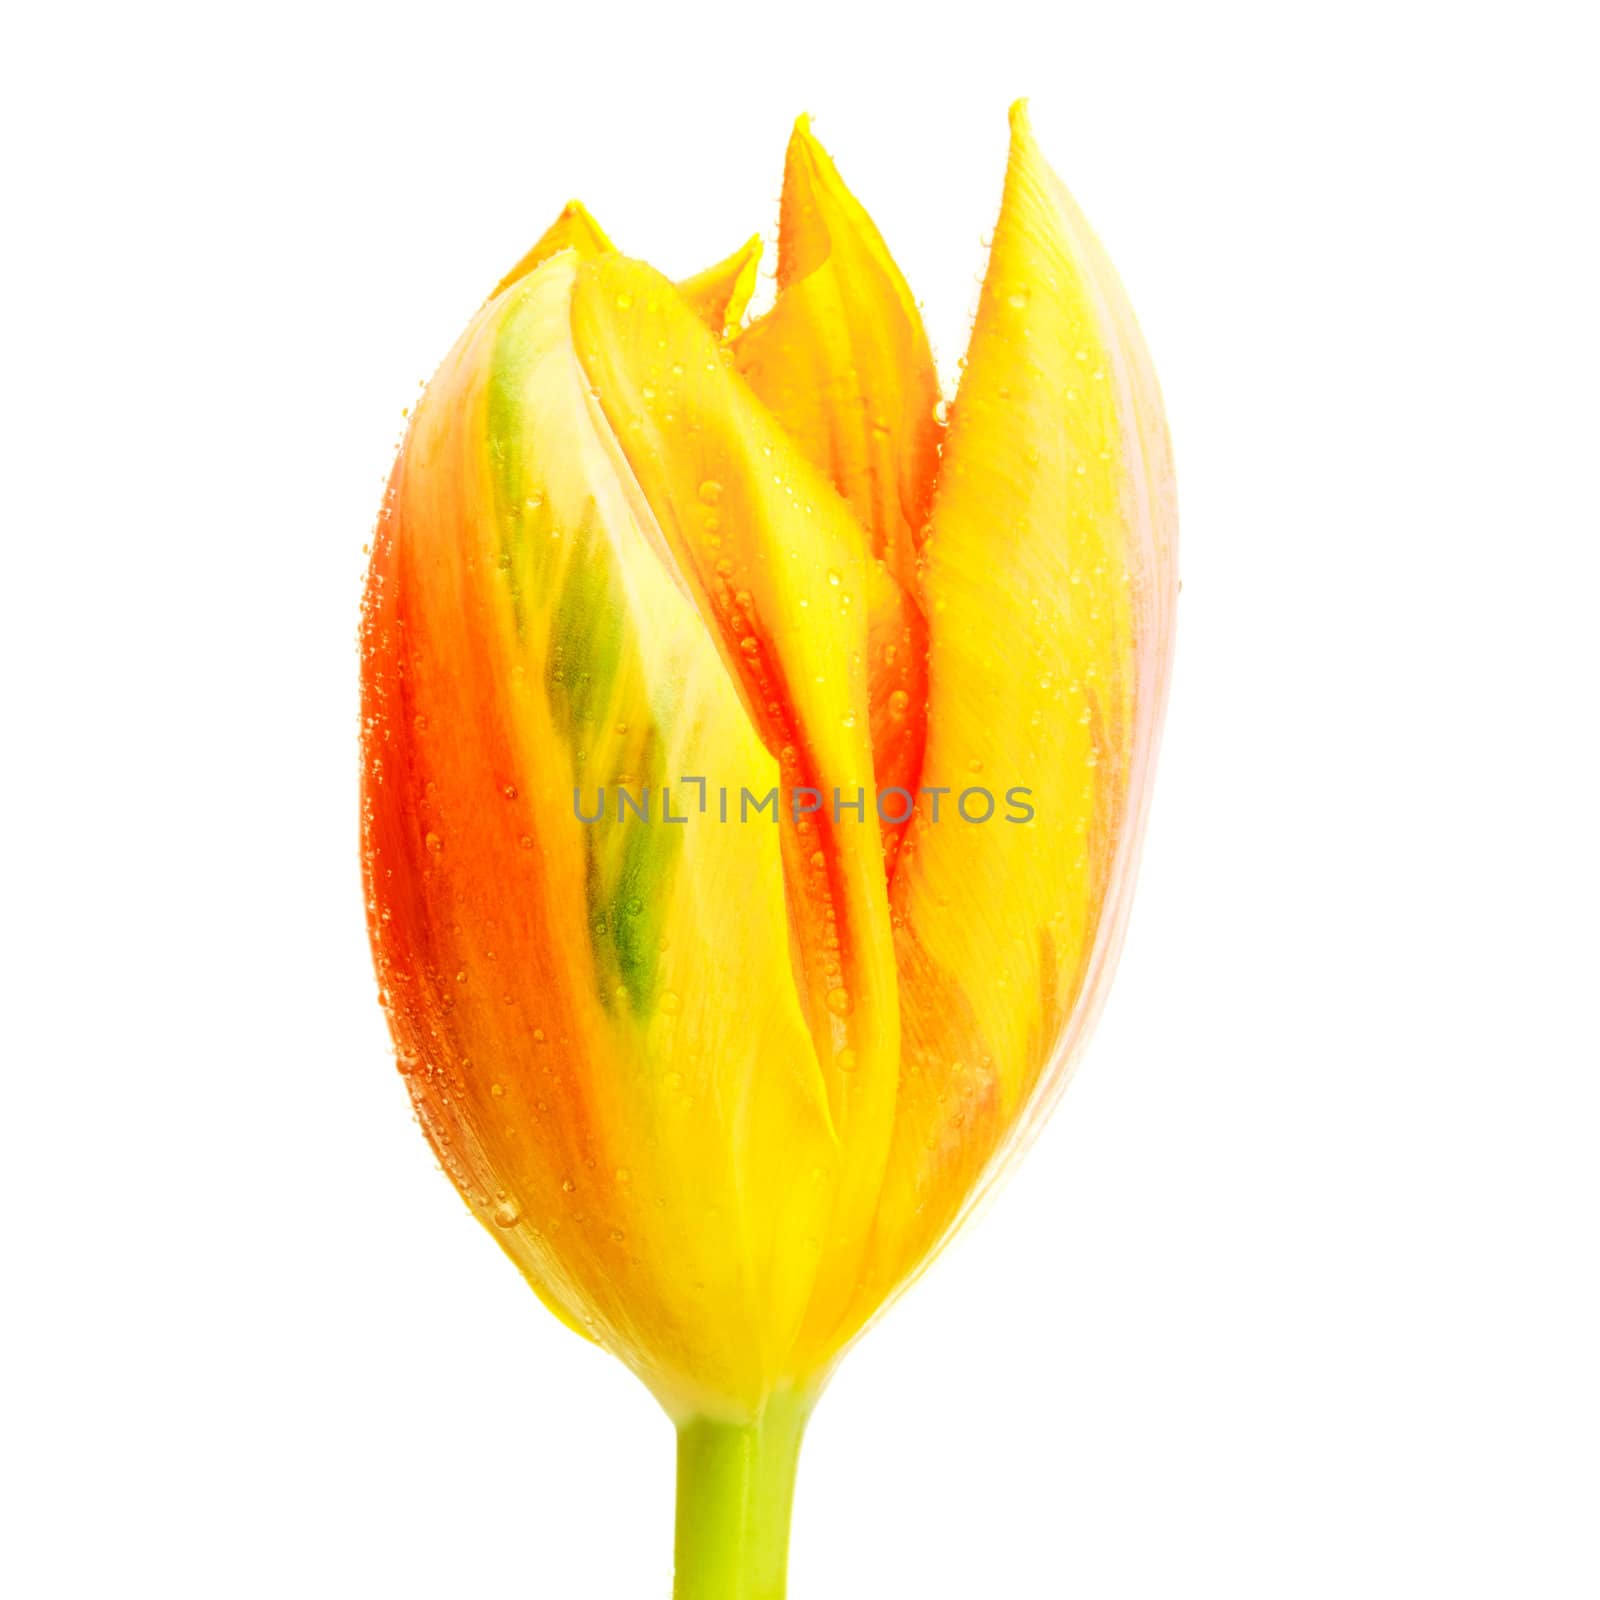 single yellow tulip isolated on white background